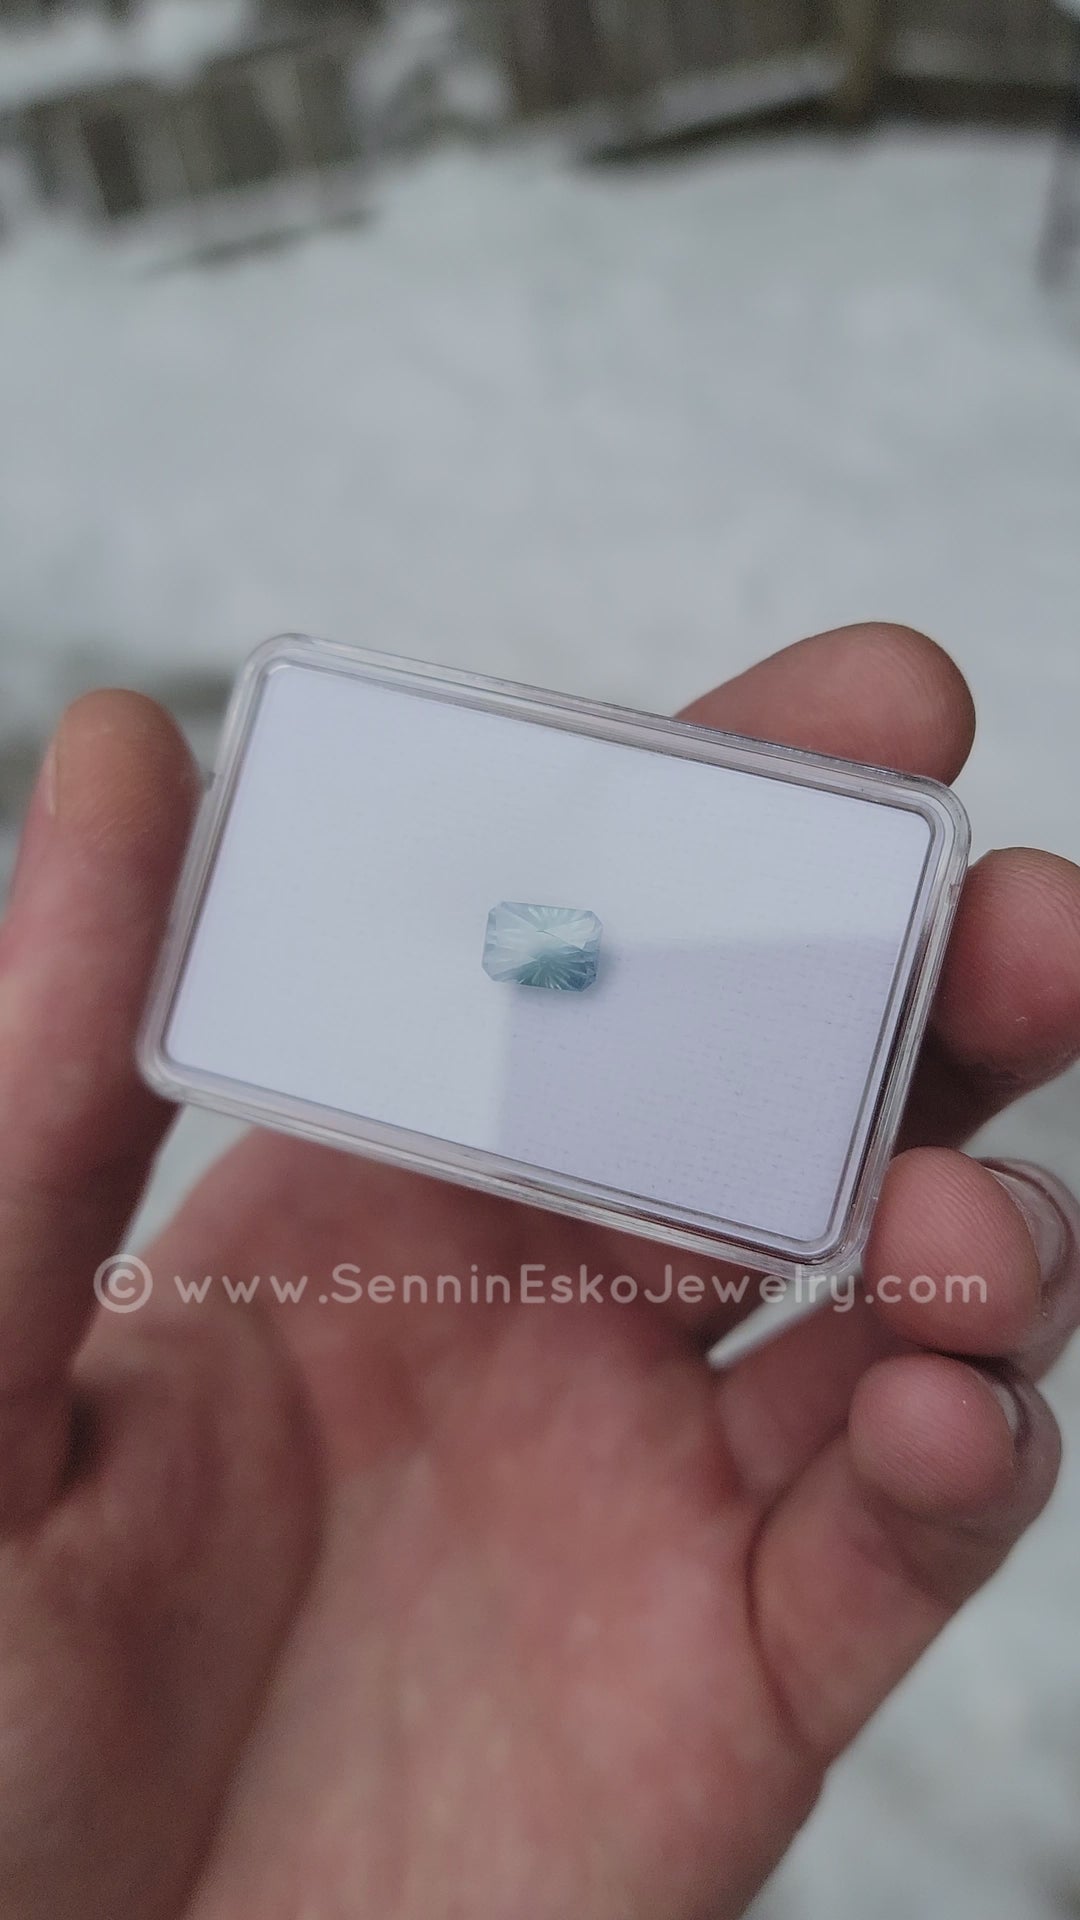 Octogone saphir du Montana bleu sarcelle clair de 2,6 ct - 8,6 x 5,9 mm